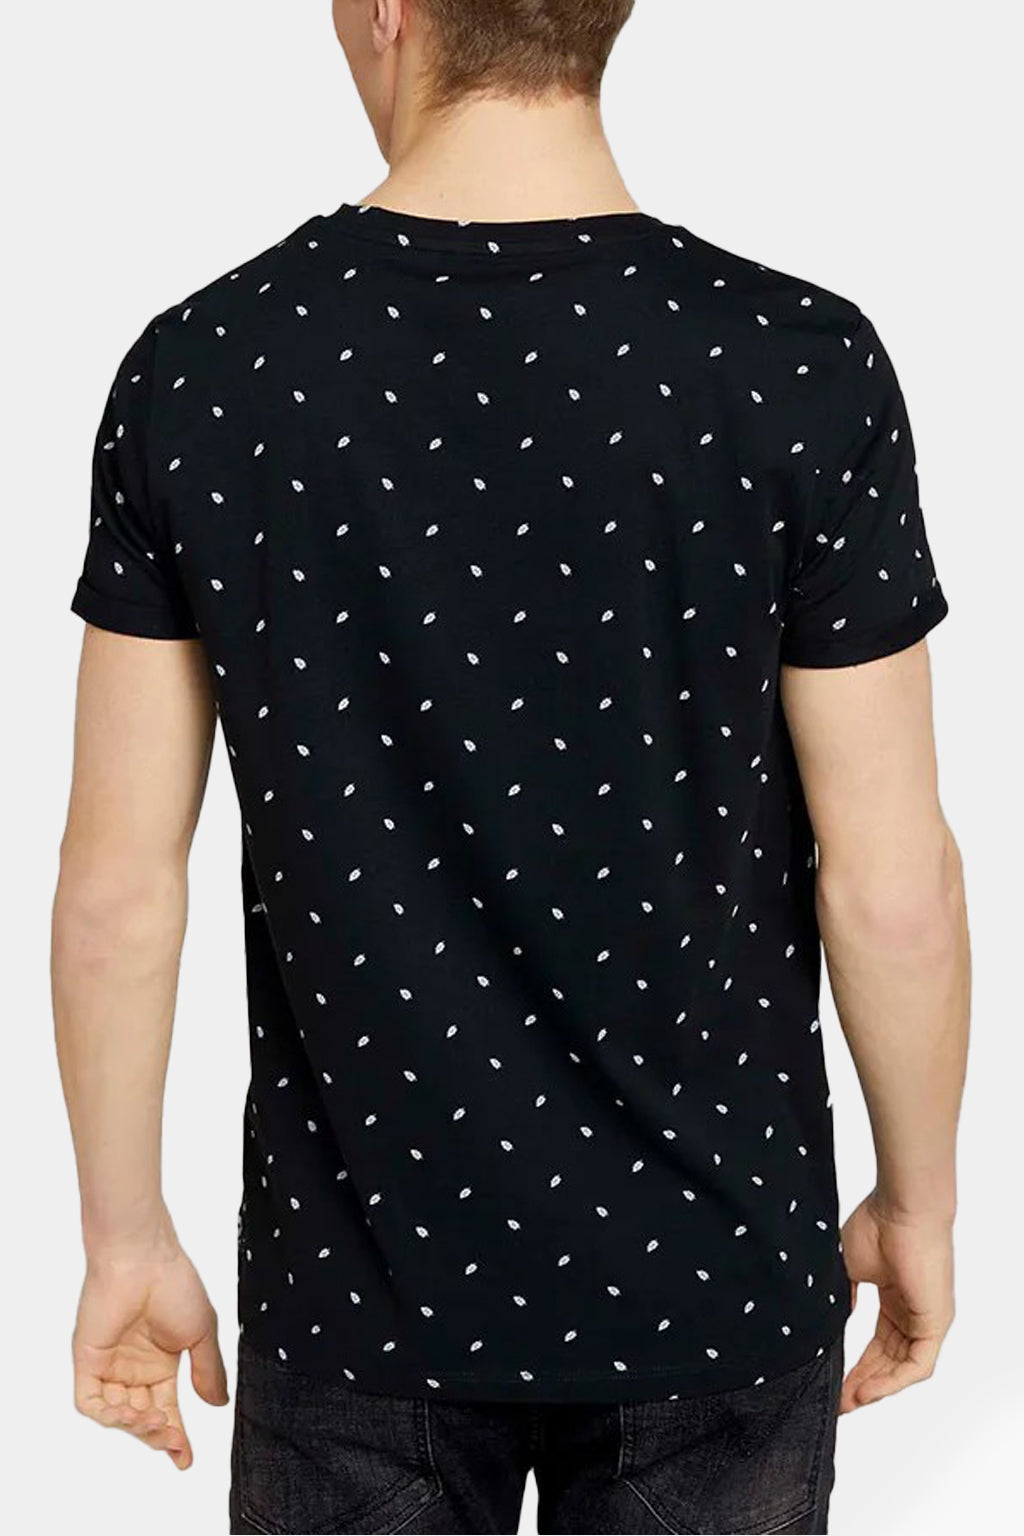 Tom Tailor - Patterned T-Shirt